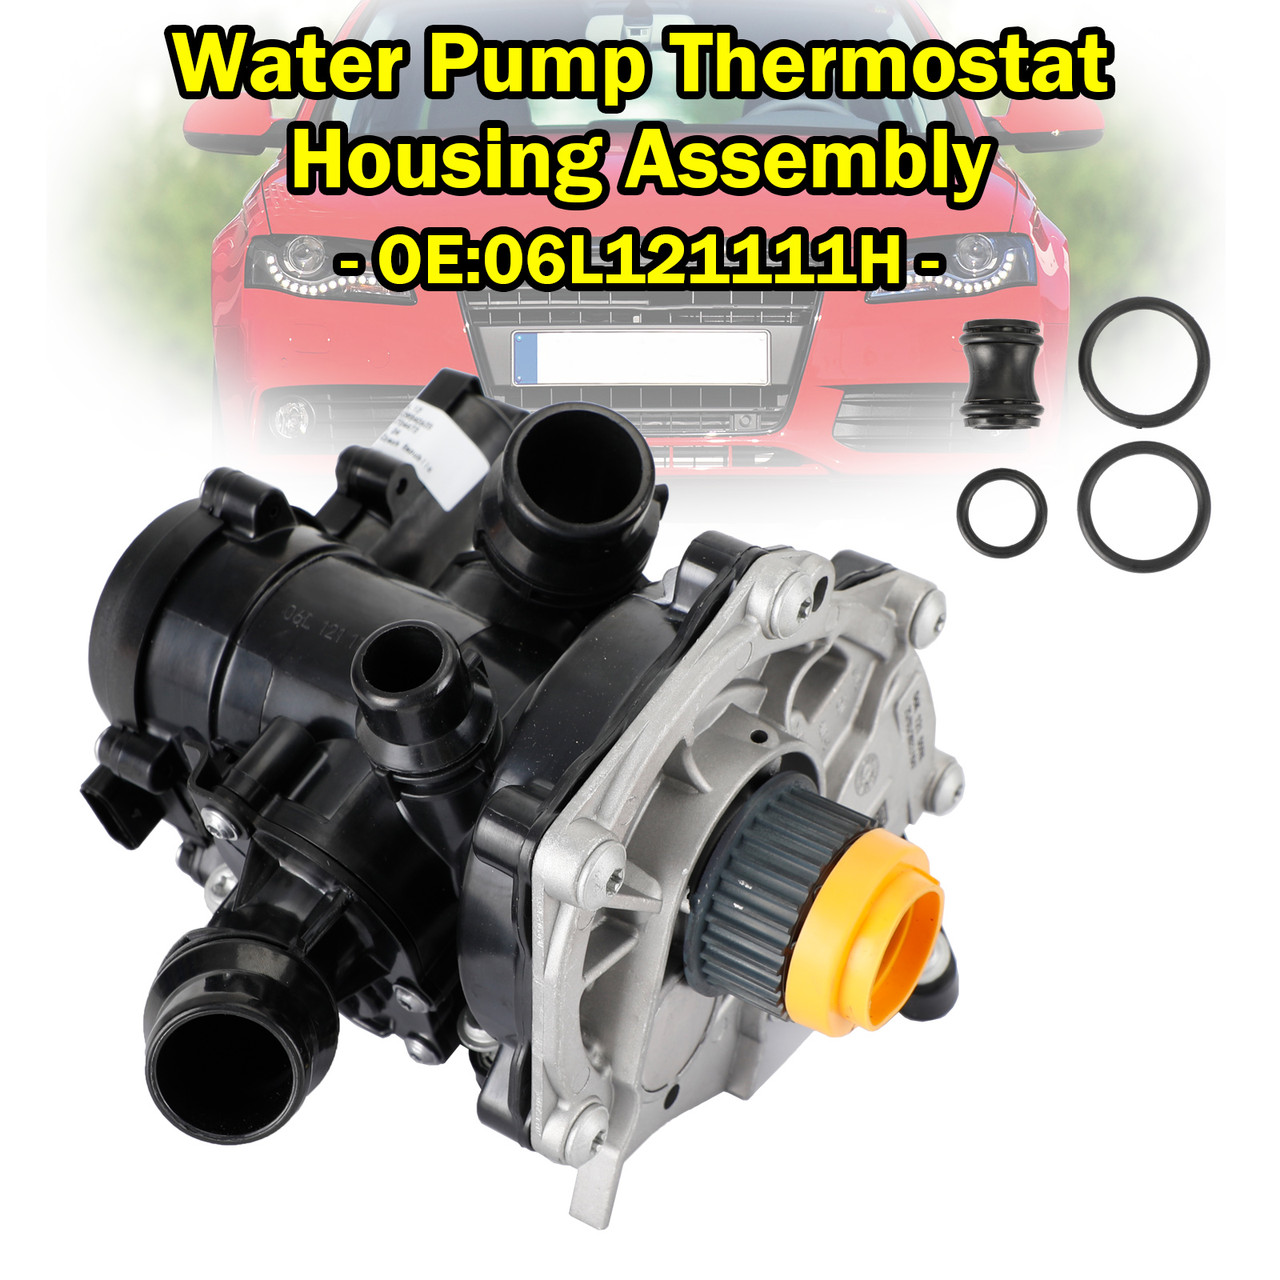 06L121111H 13-19 Audi A3 8VF,8VA Sportback 1.8 TFSI quattro Water Pump Thermostat Housing Assembly Generic